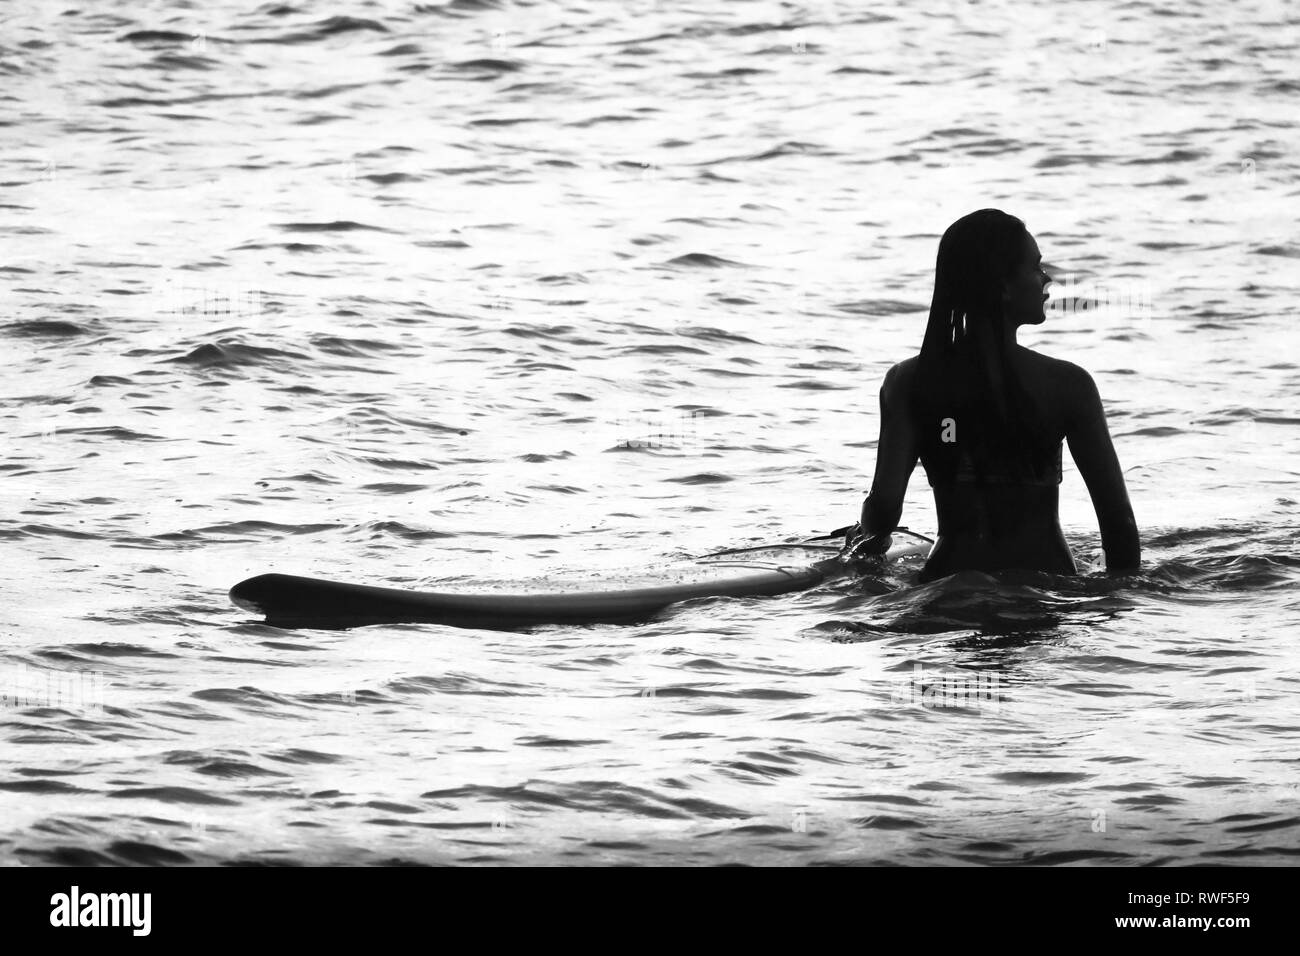 Insel Surfer Girl in Wasser mit Surfboard, Cloud 9-Siargao, Philippinen warten Stockfoto